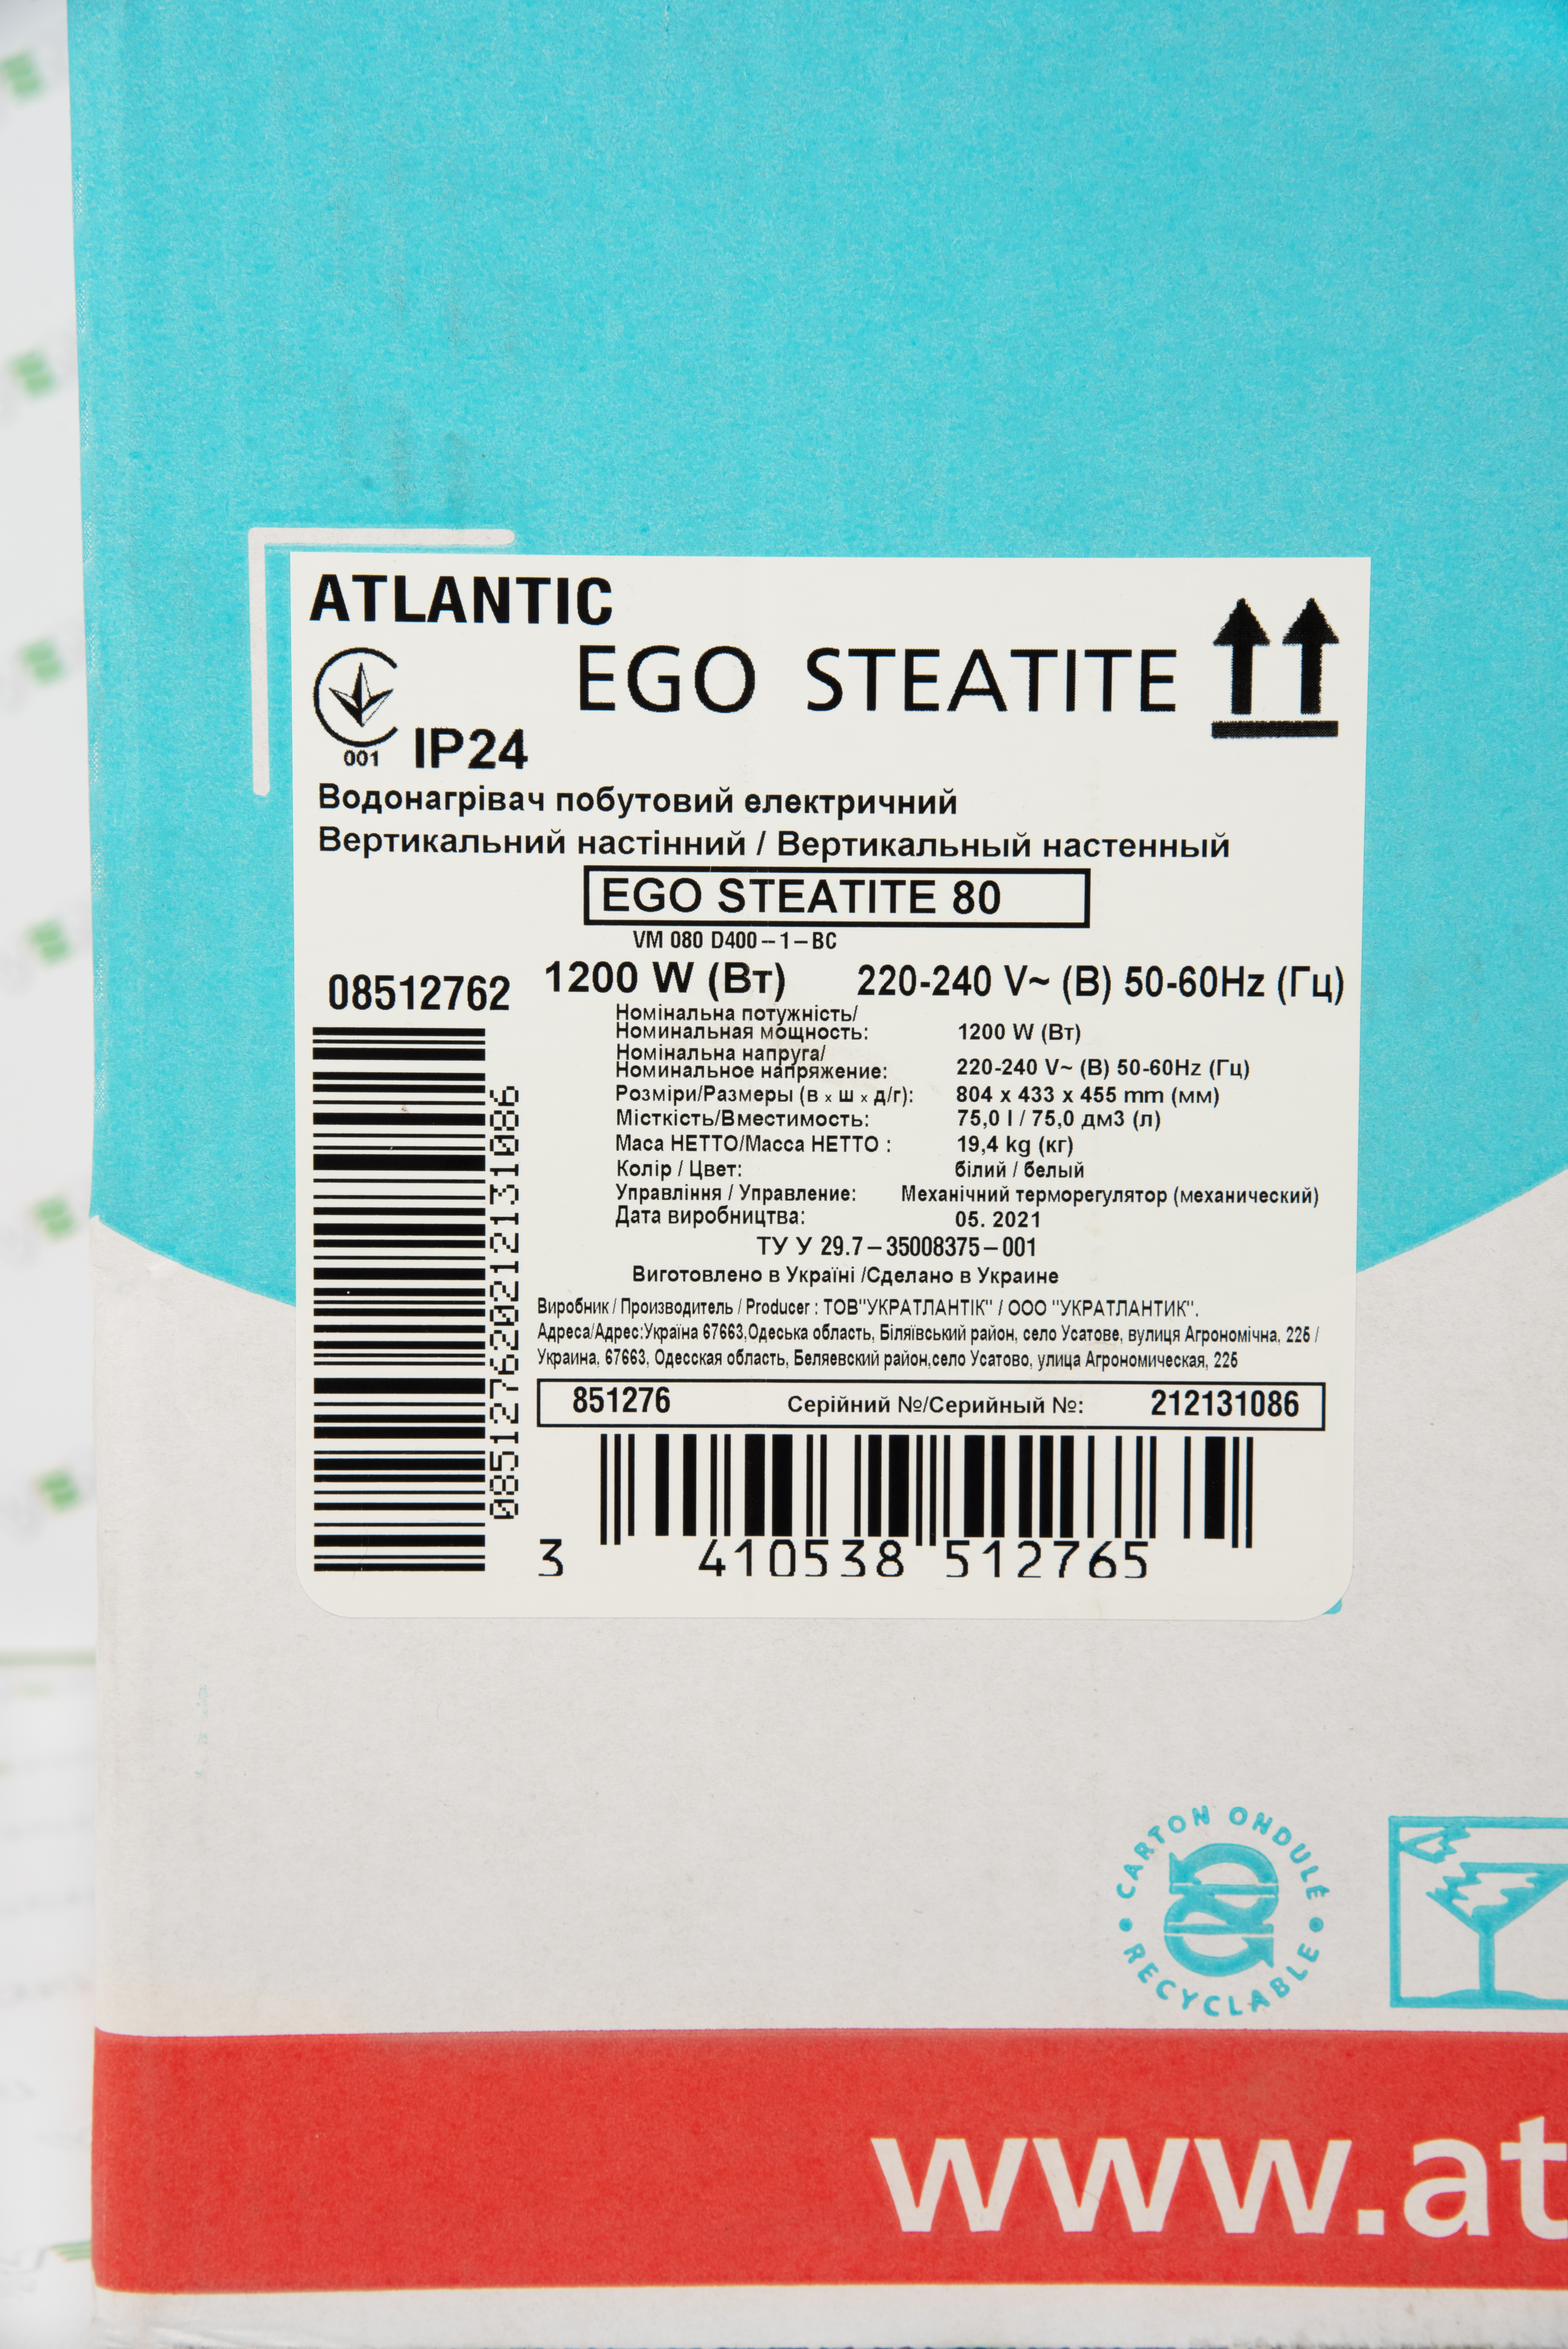 Atlantic Steatite Ego VM 80 D400-1-BC в продажі - фото 19